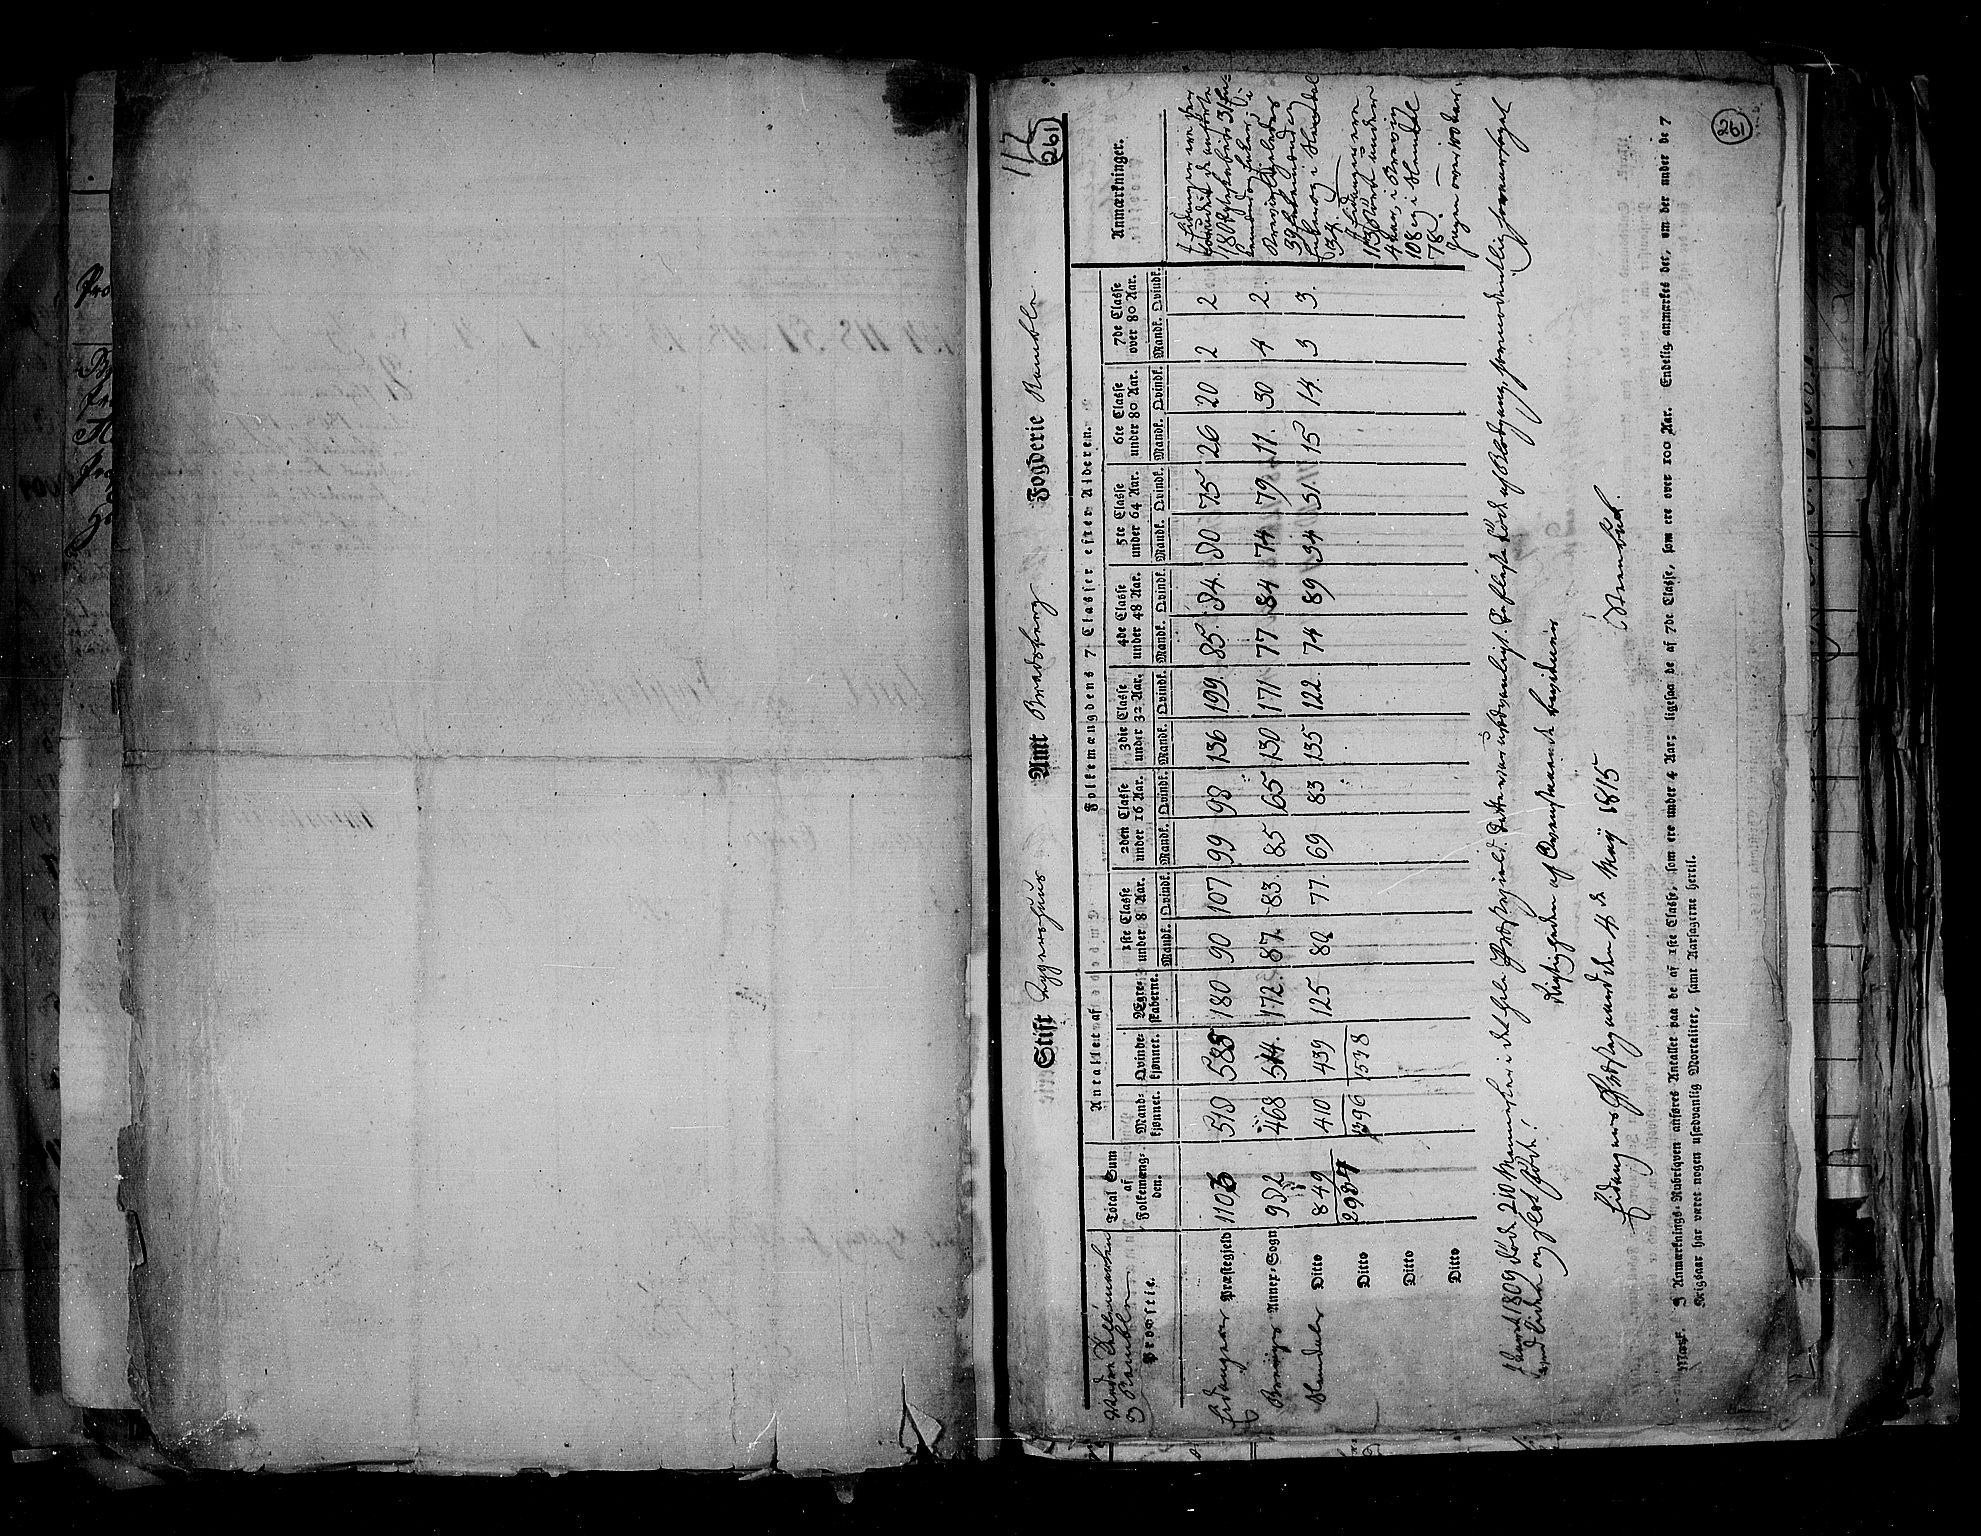 RA, Census 1815, vol. 1: Akershus stift and Kristiansand stift, 1815, p. 190